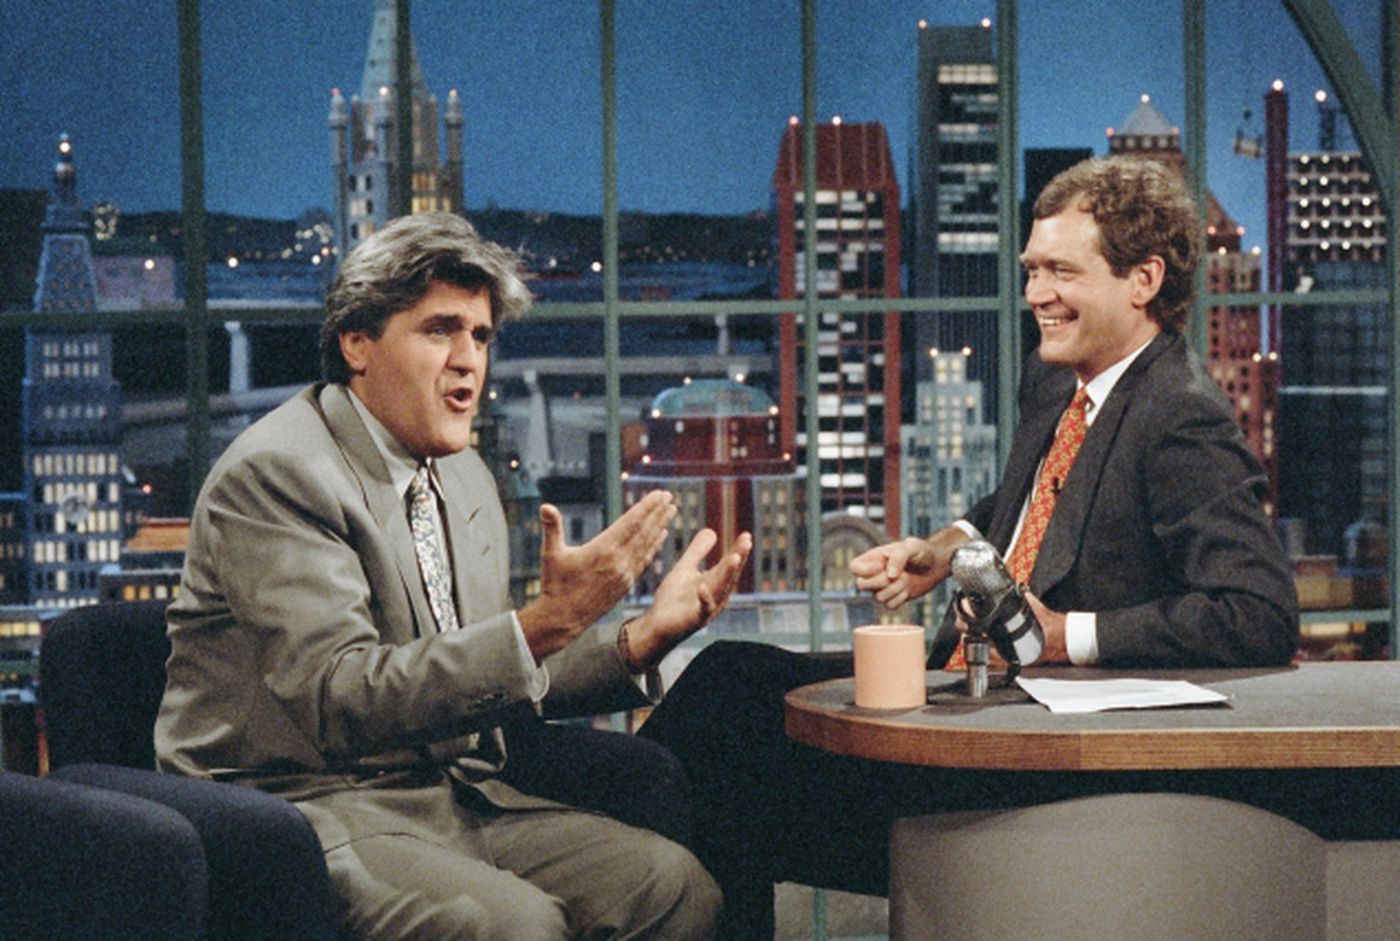 Who has more money Jay Leno or David Letterman?